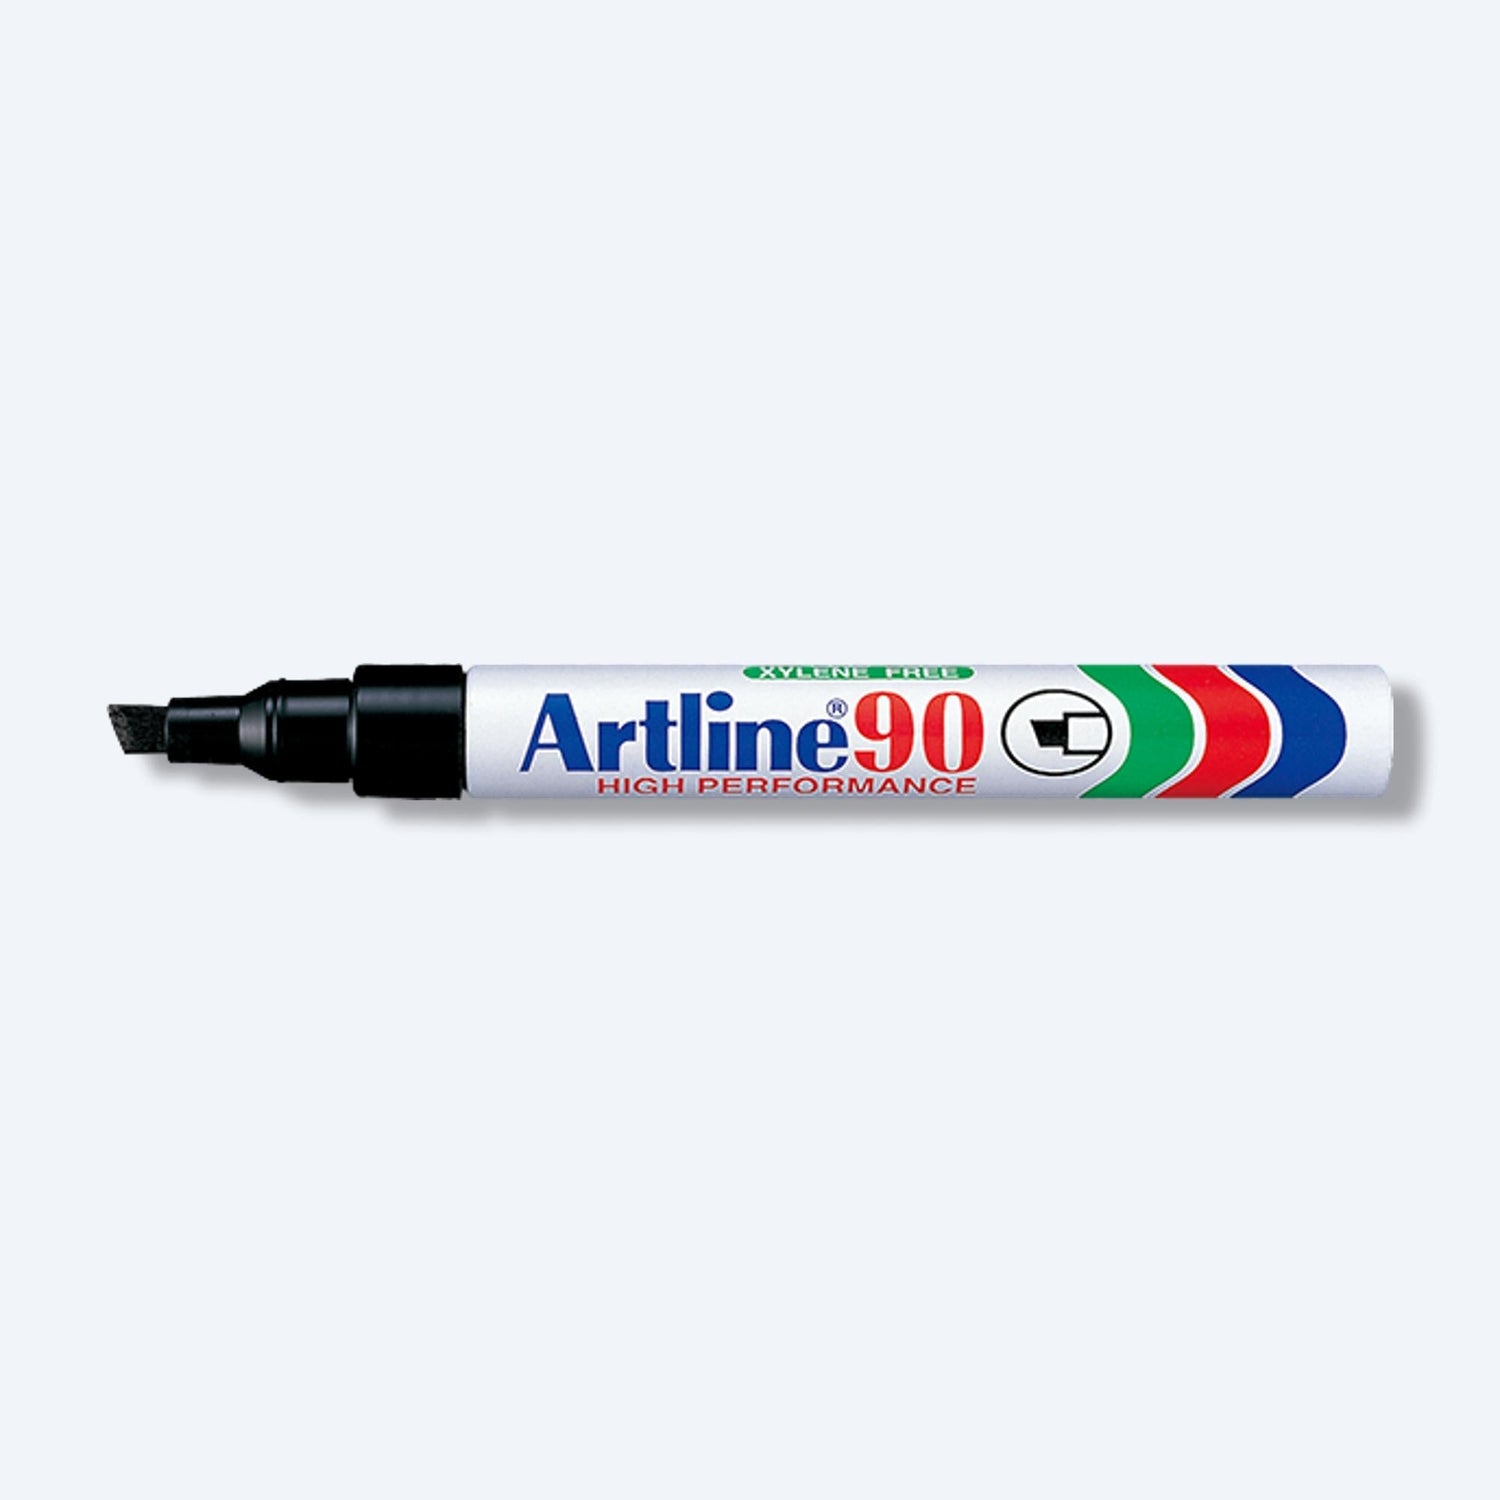 Artline EK-90 高效能箱頭筆/Marker，帶有紅藍綠彩條，理想選擇用於標記及批發。